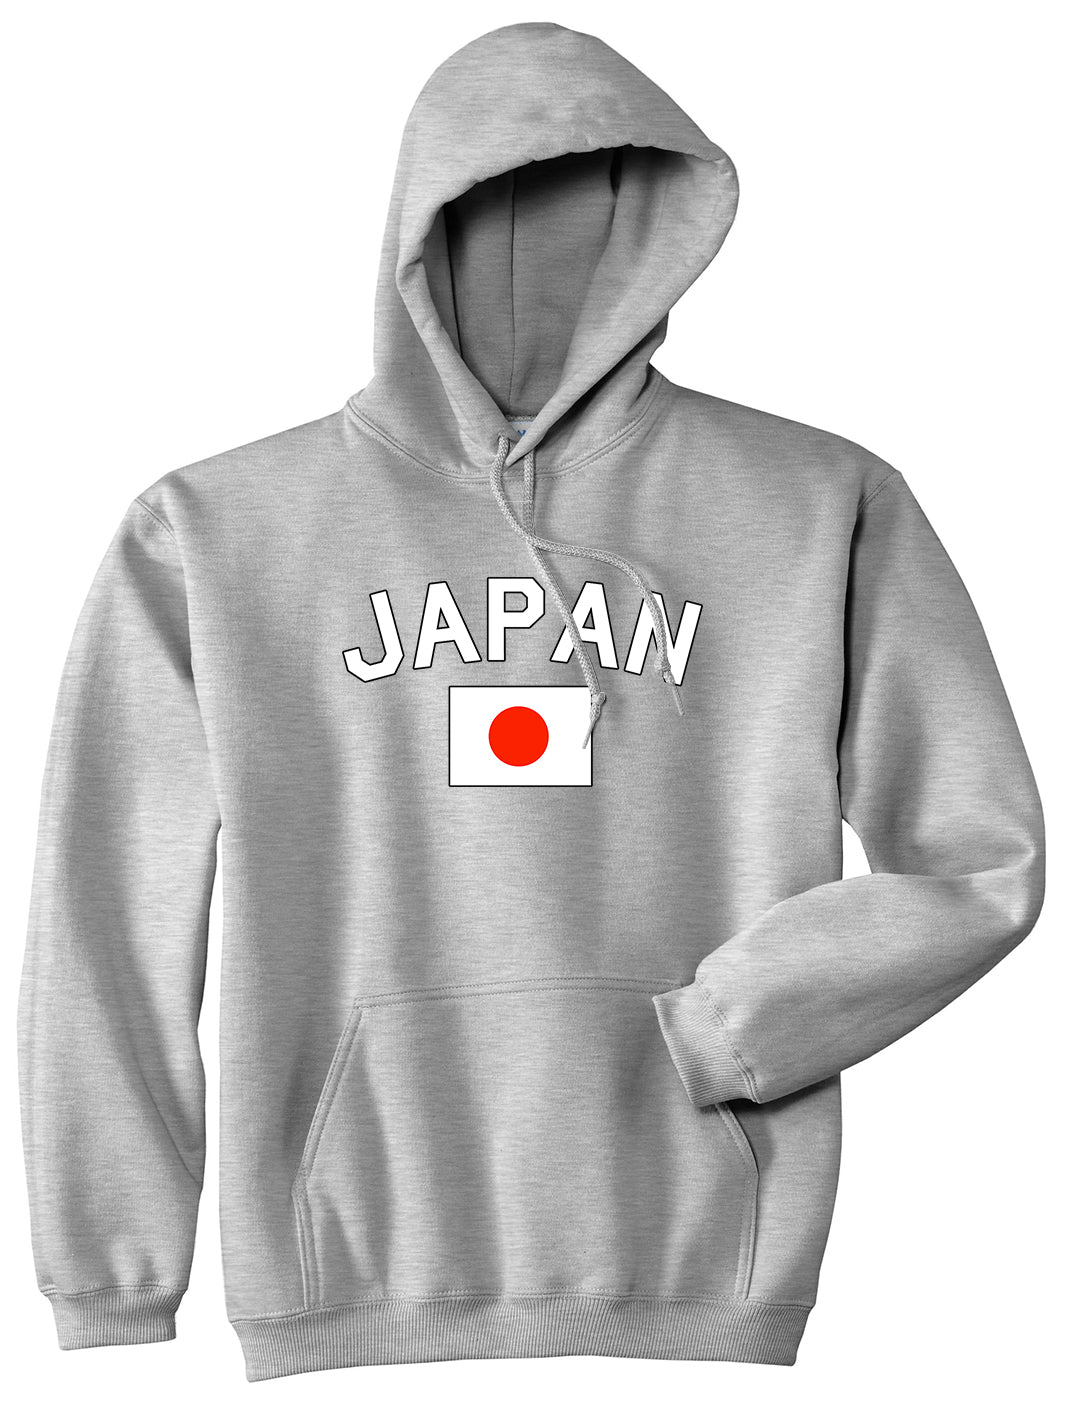 Japan With Japanese Flag Mens Pullover Hoodie Grey